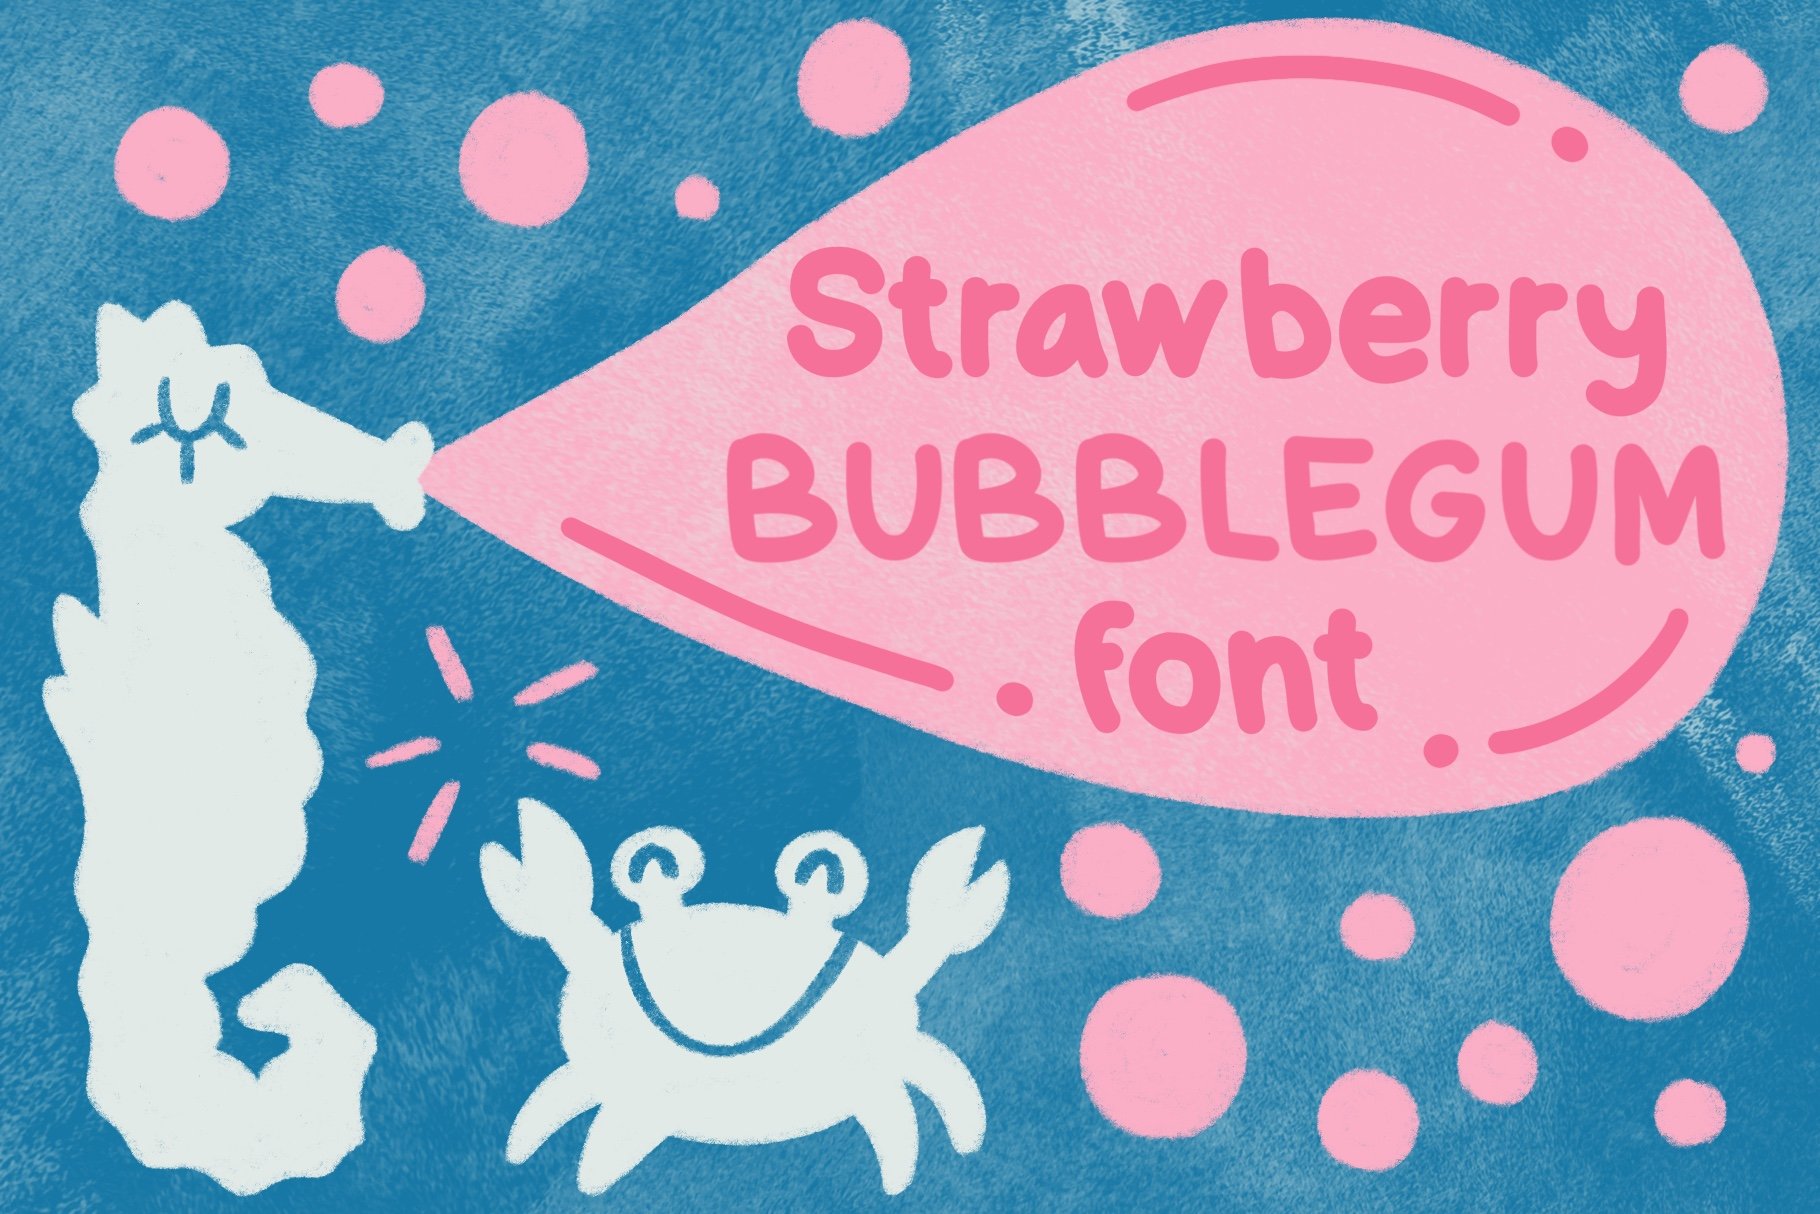 Strawberry Bubblegum font cover image.